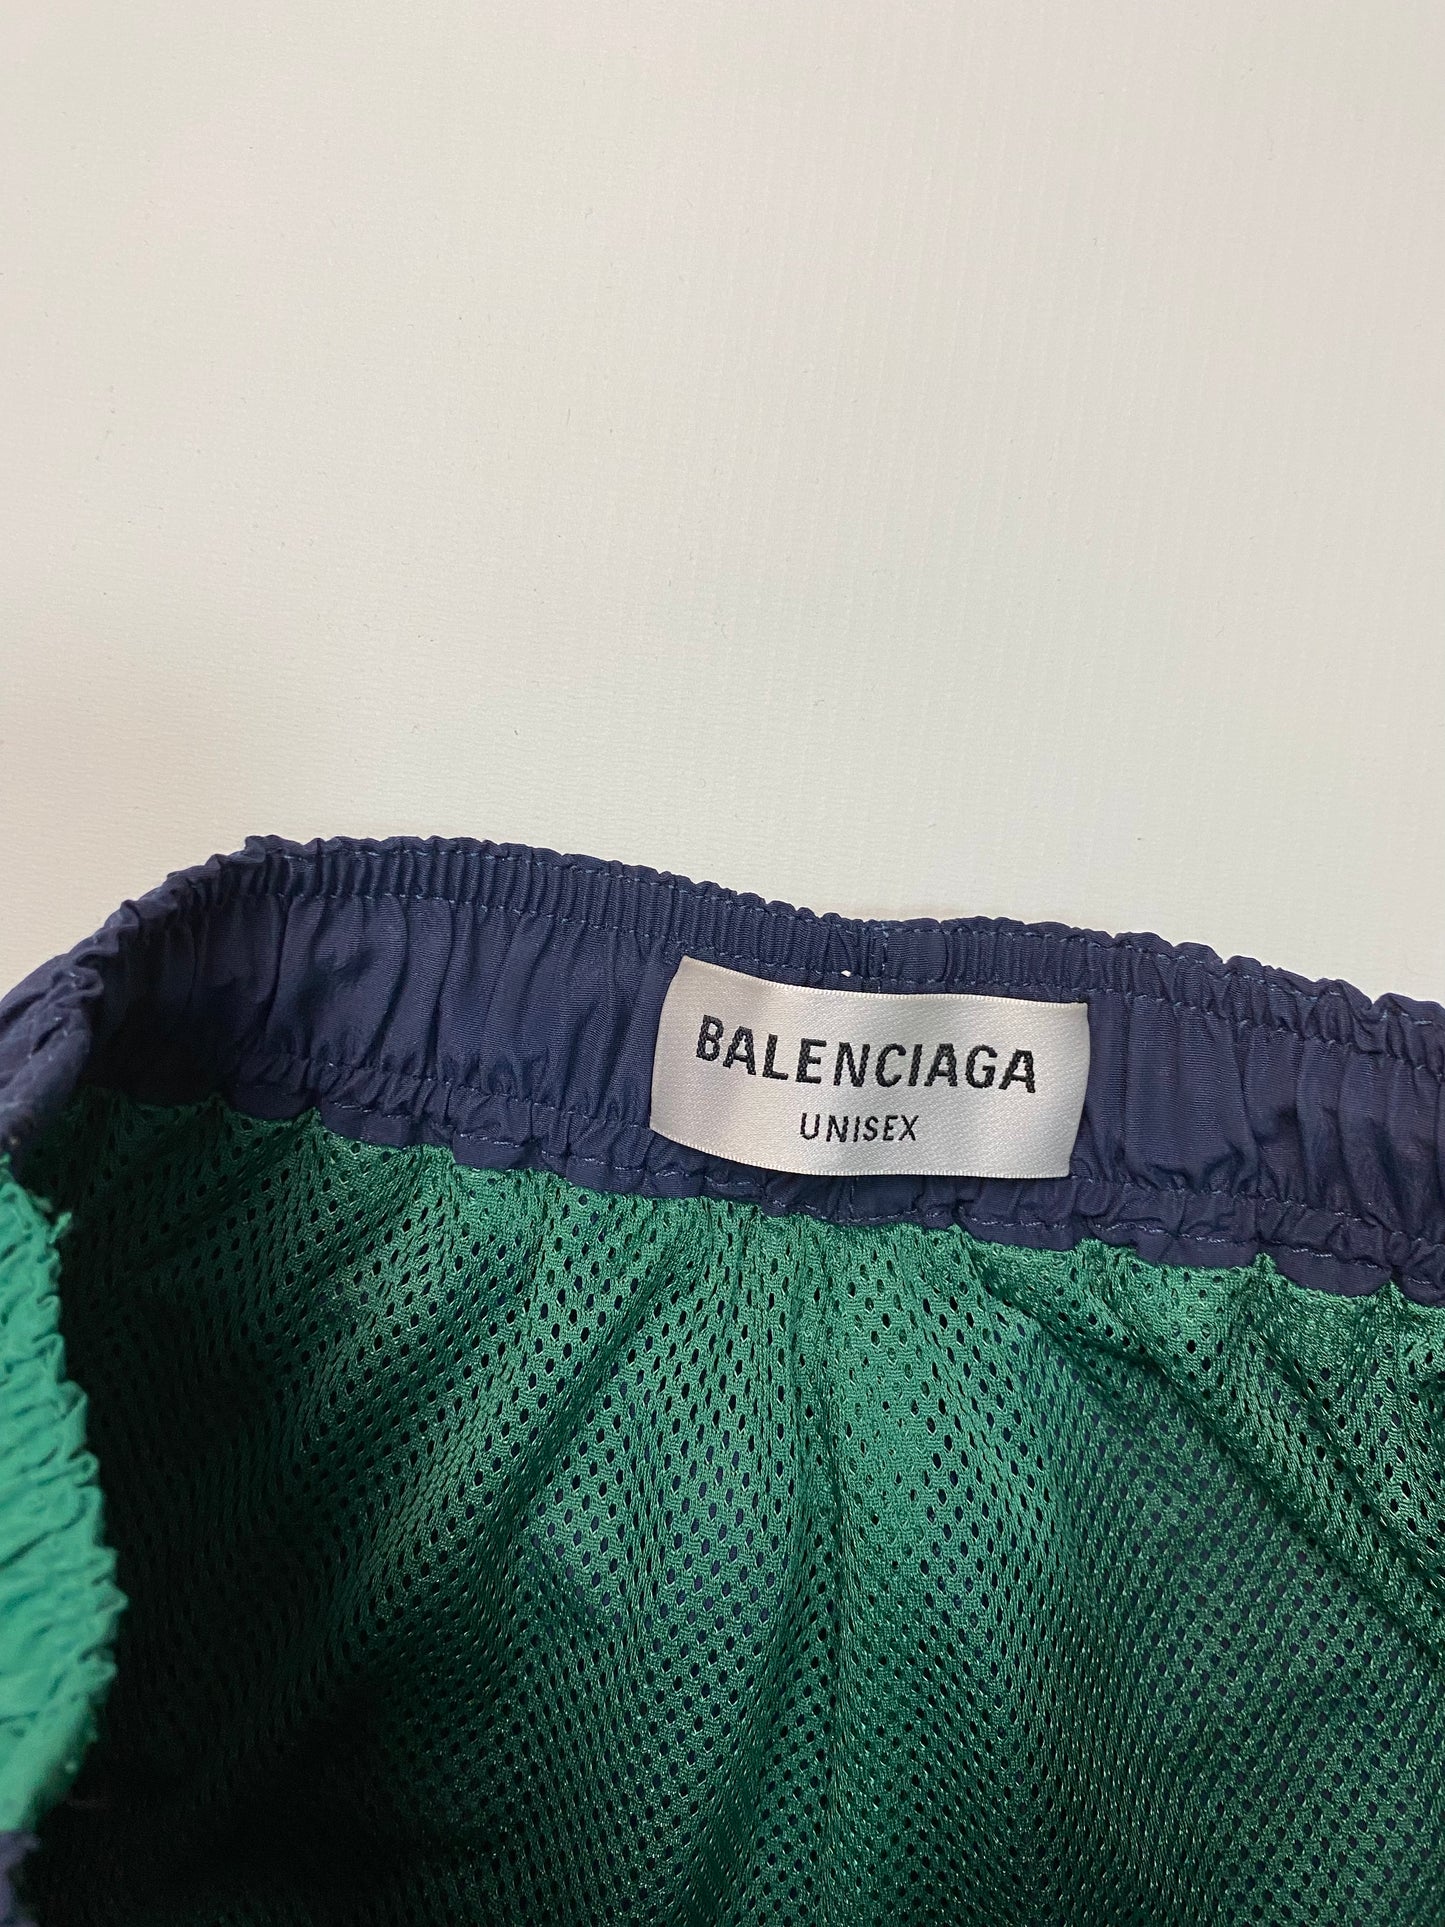 Balenciaga hybrid trackpants x jeans in blue & teal green SZ:S